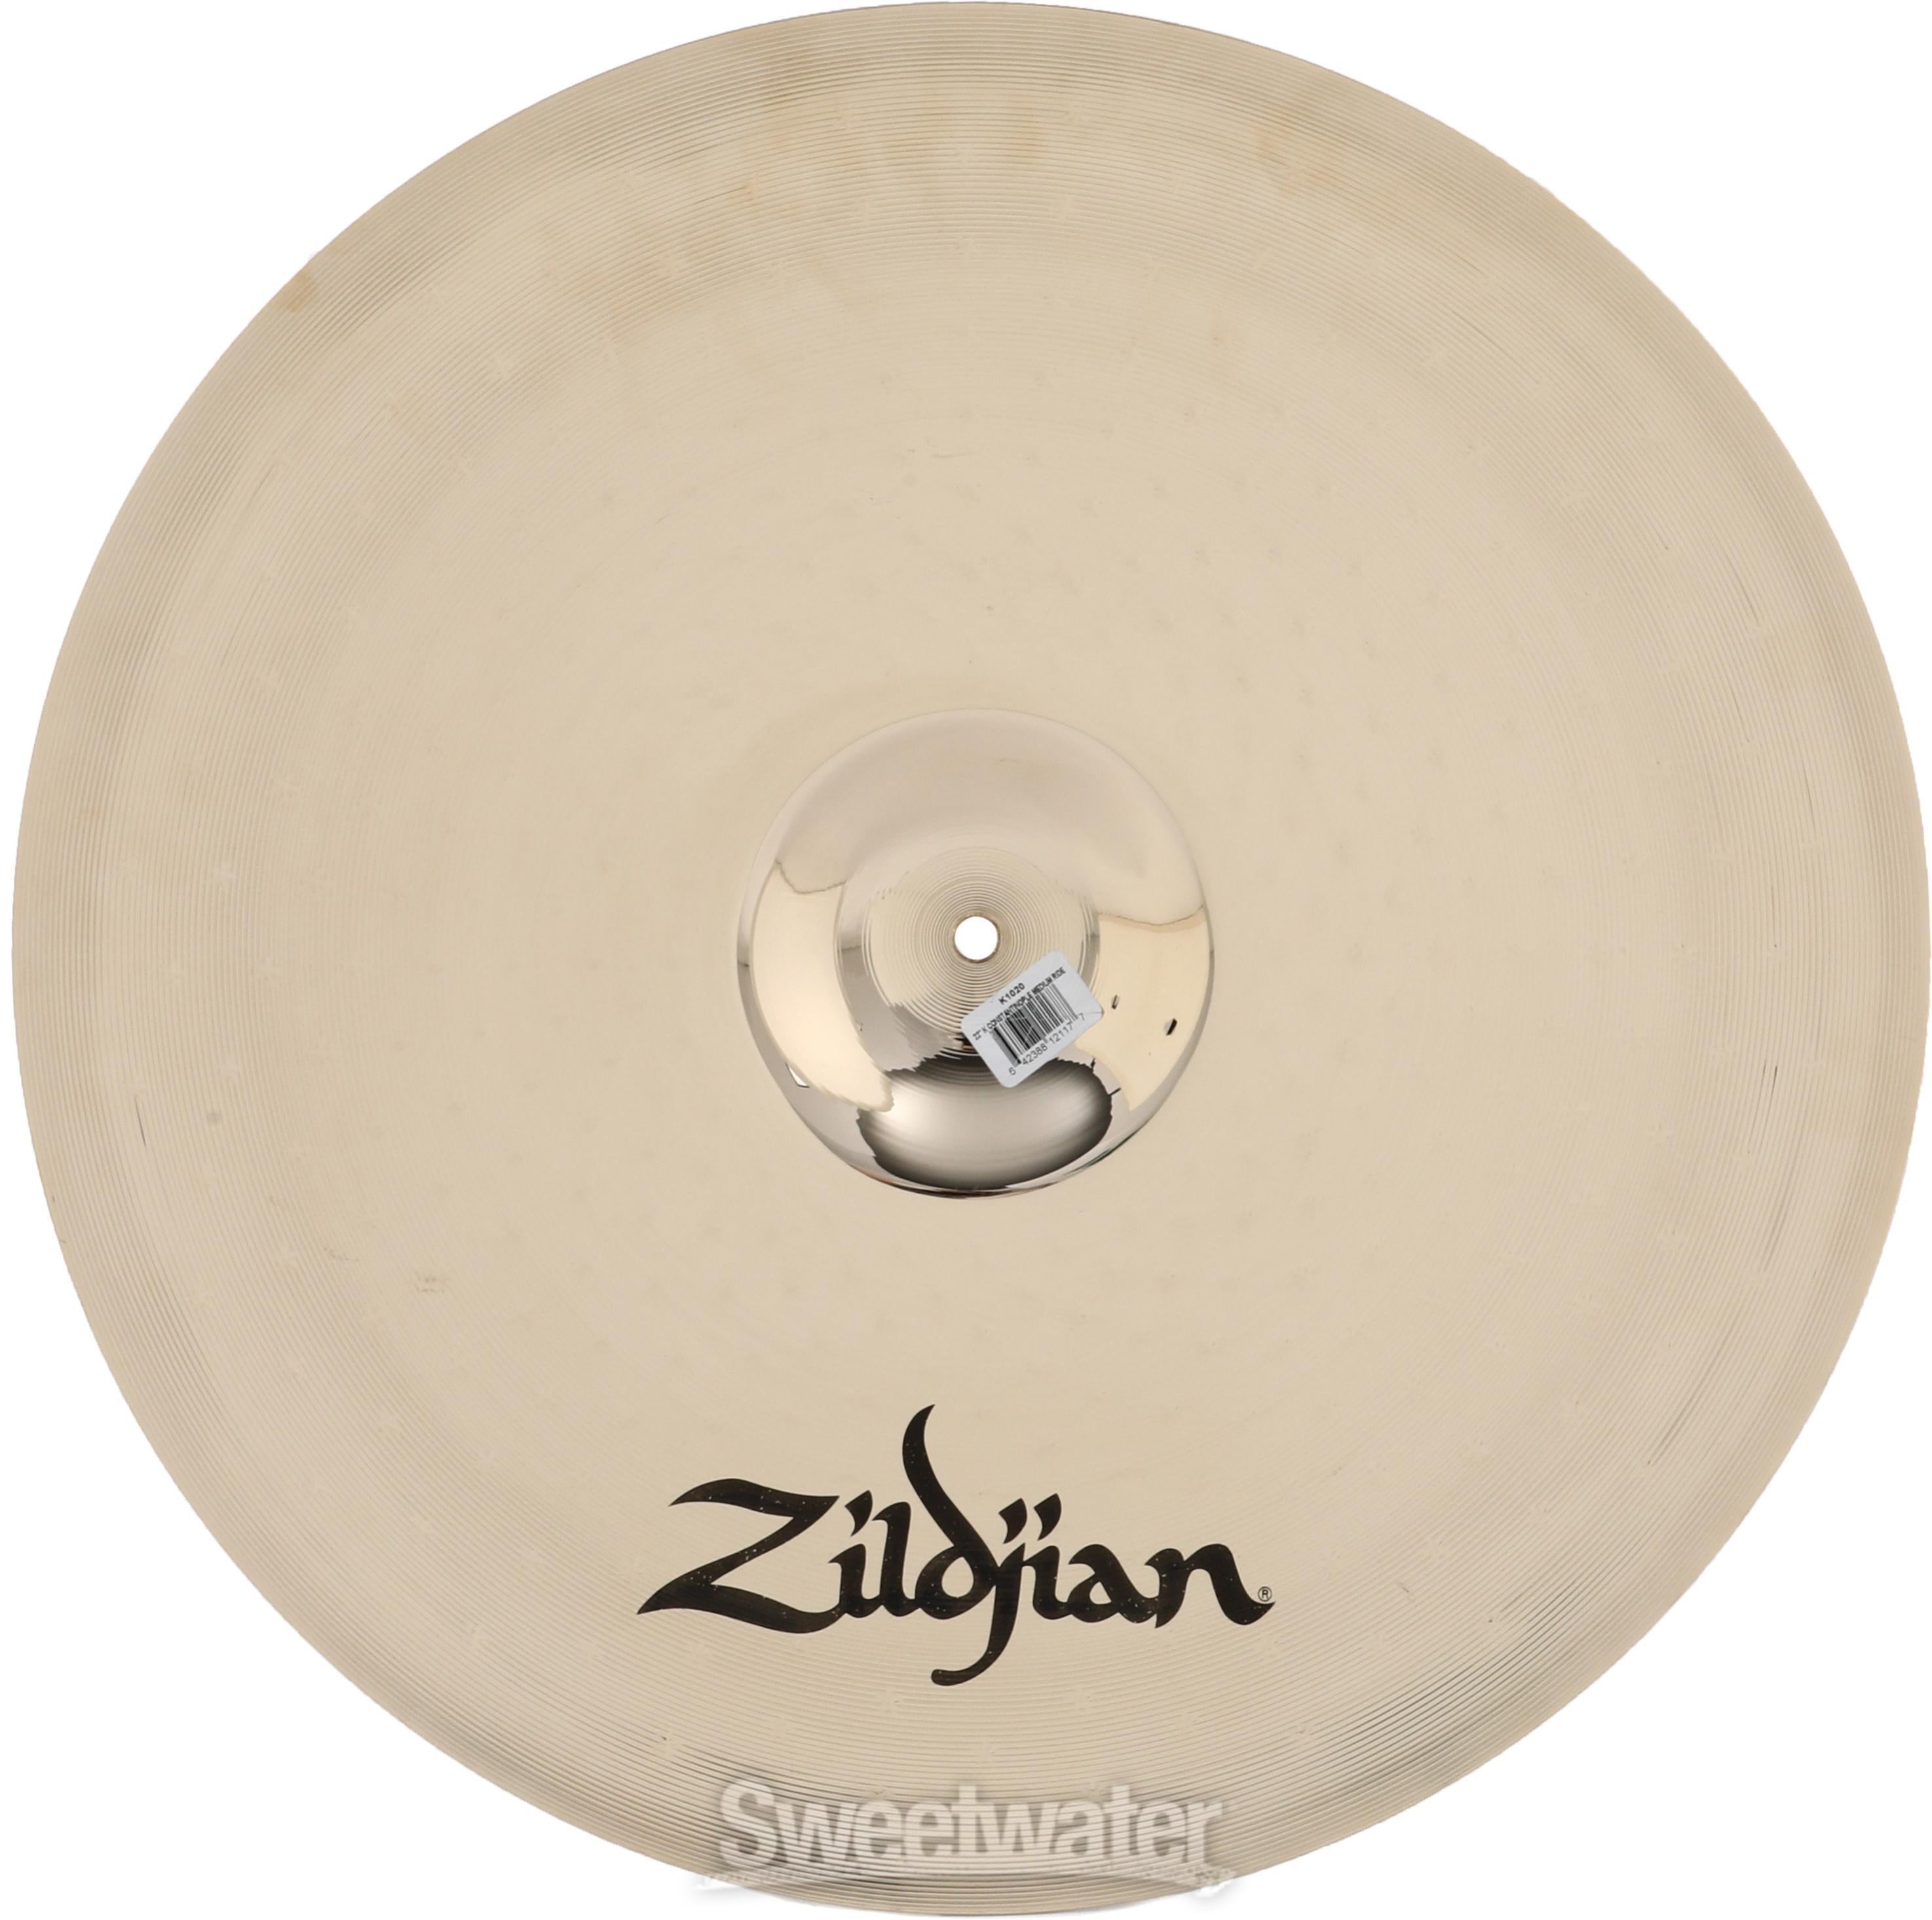 Zildjian Z Custom Ride Cymbal - 22 inch